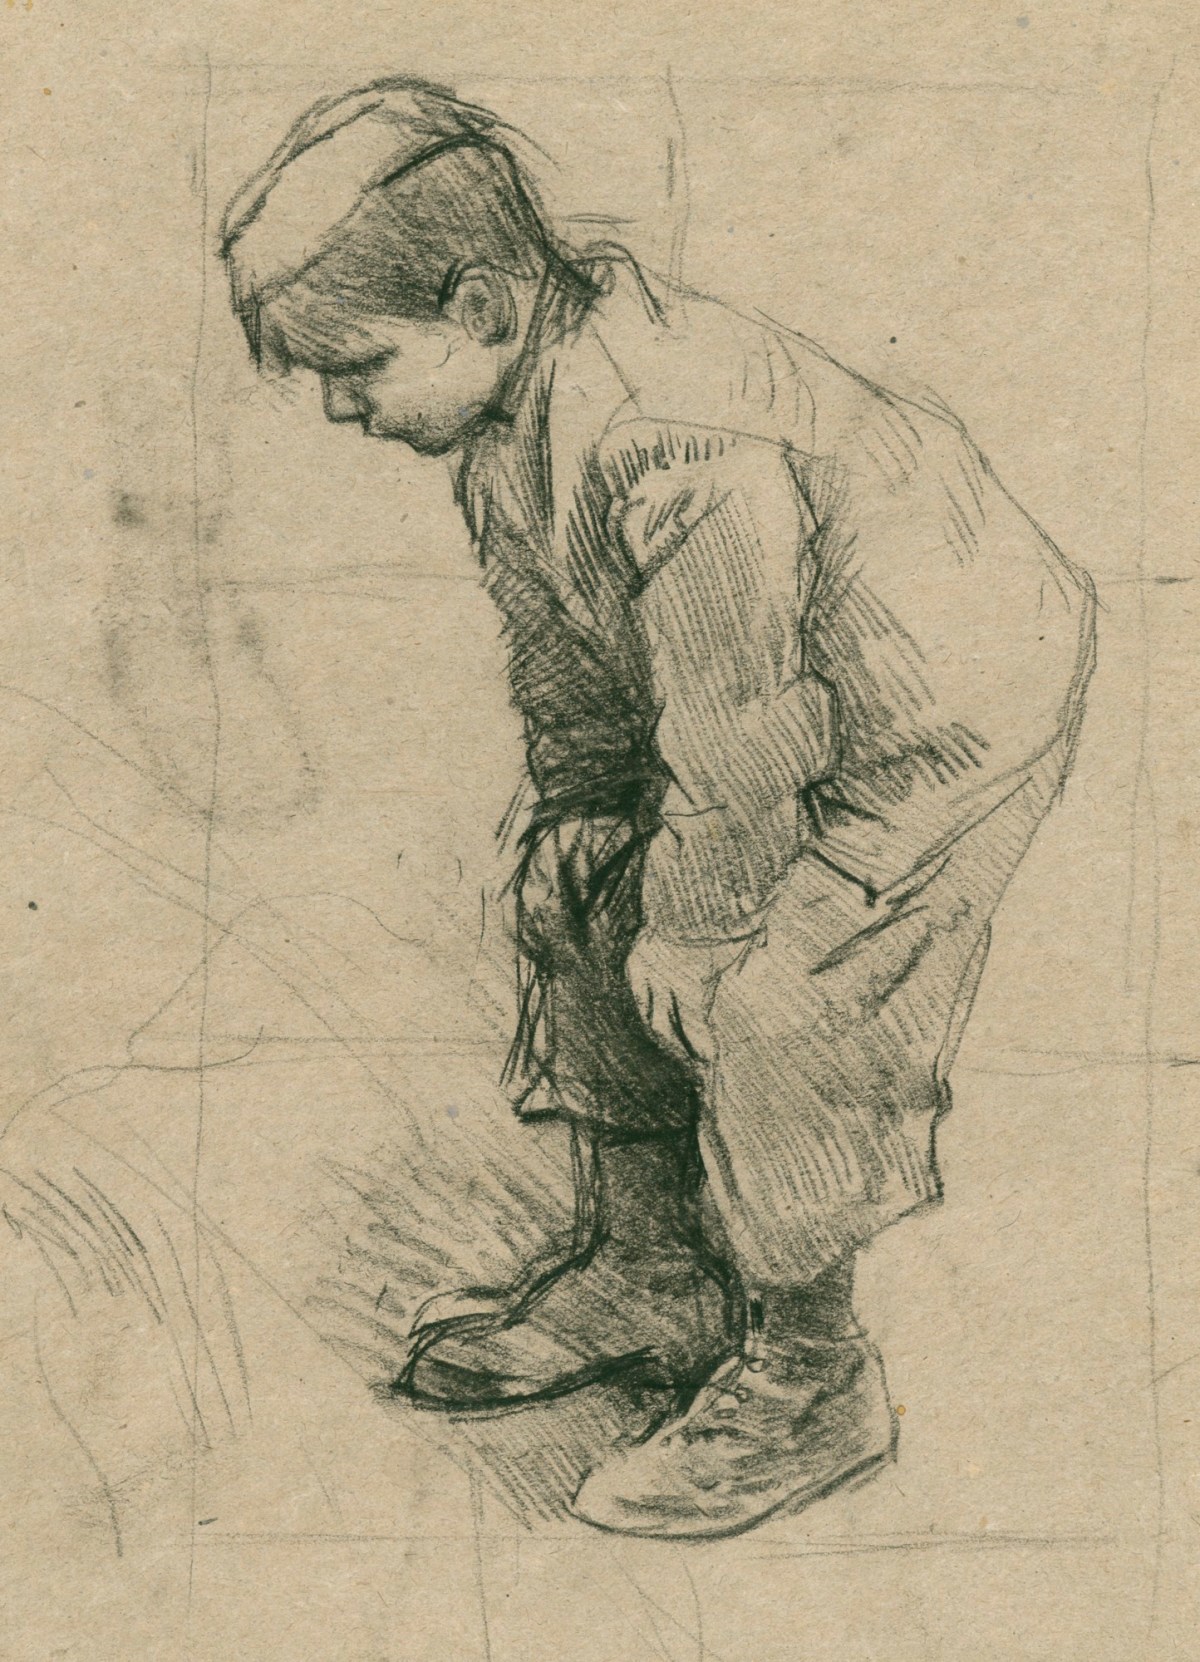 Boy Making A Chaulk Drawing Of Himself Stock Photo - Download